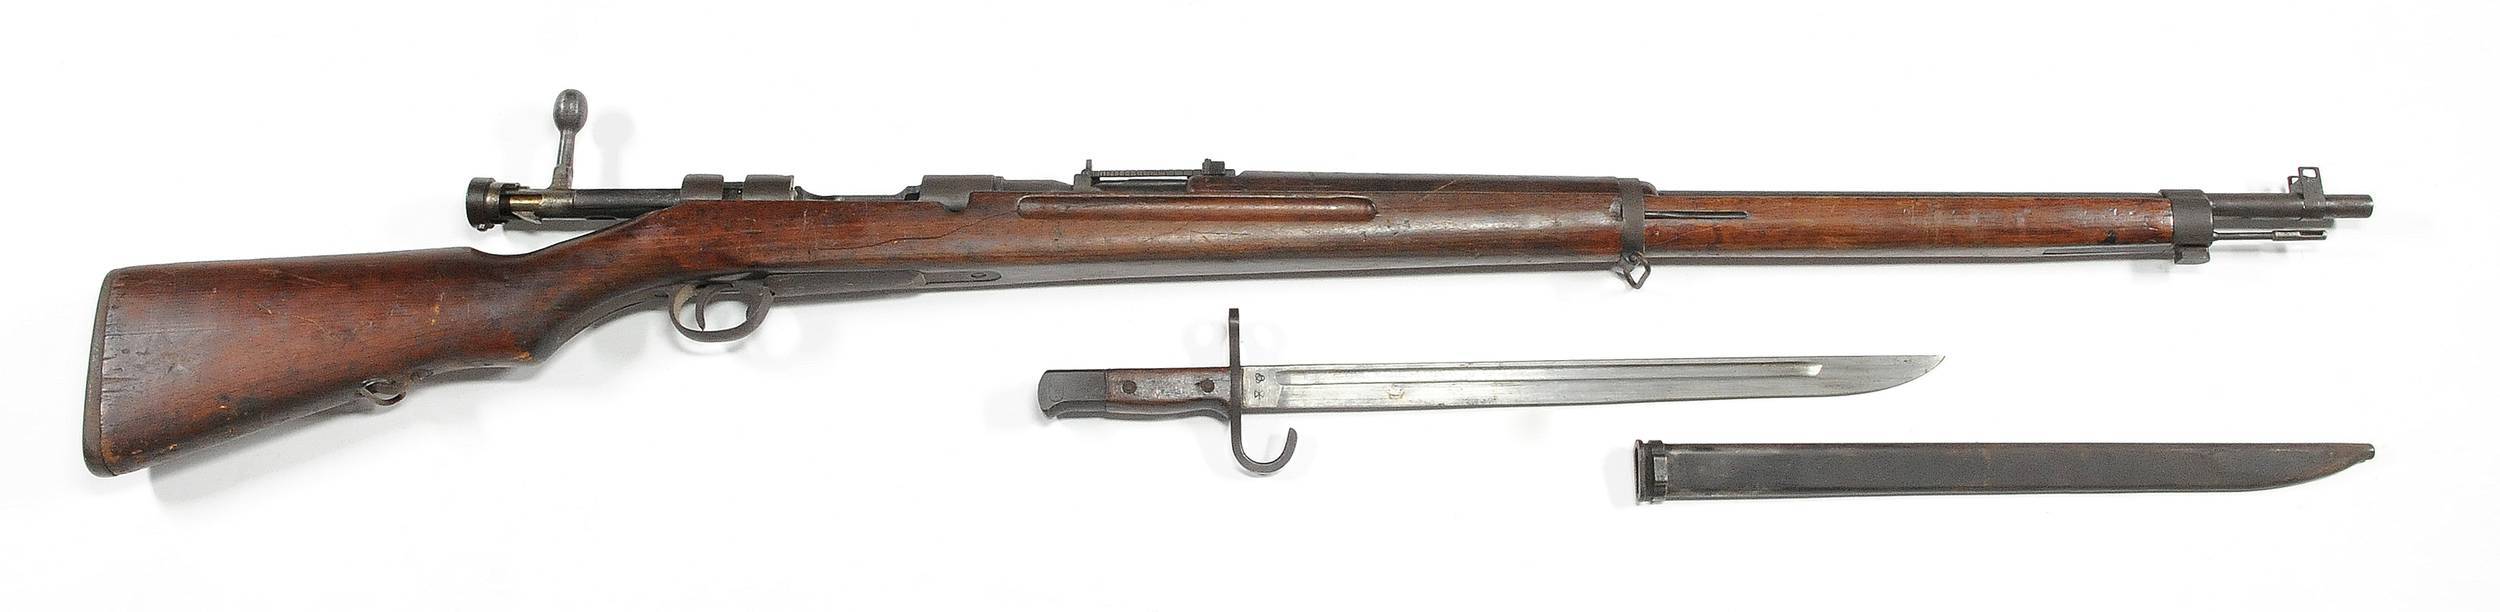 Type 38 (винтовка) — википедия с видео // wiki 2